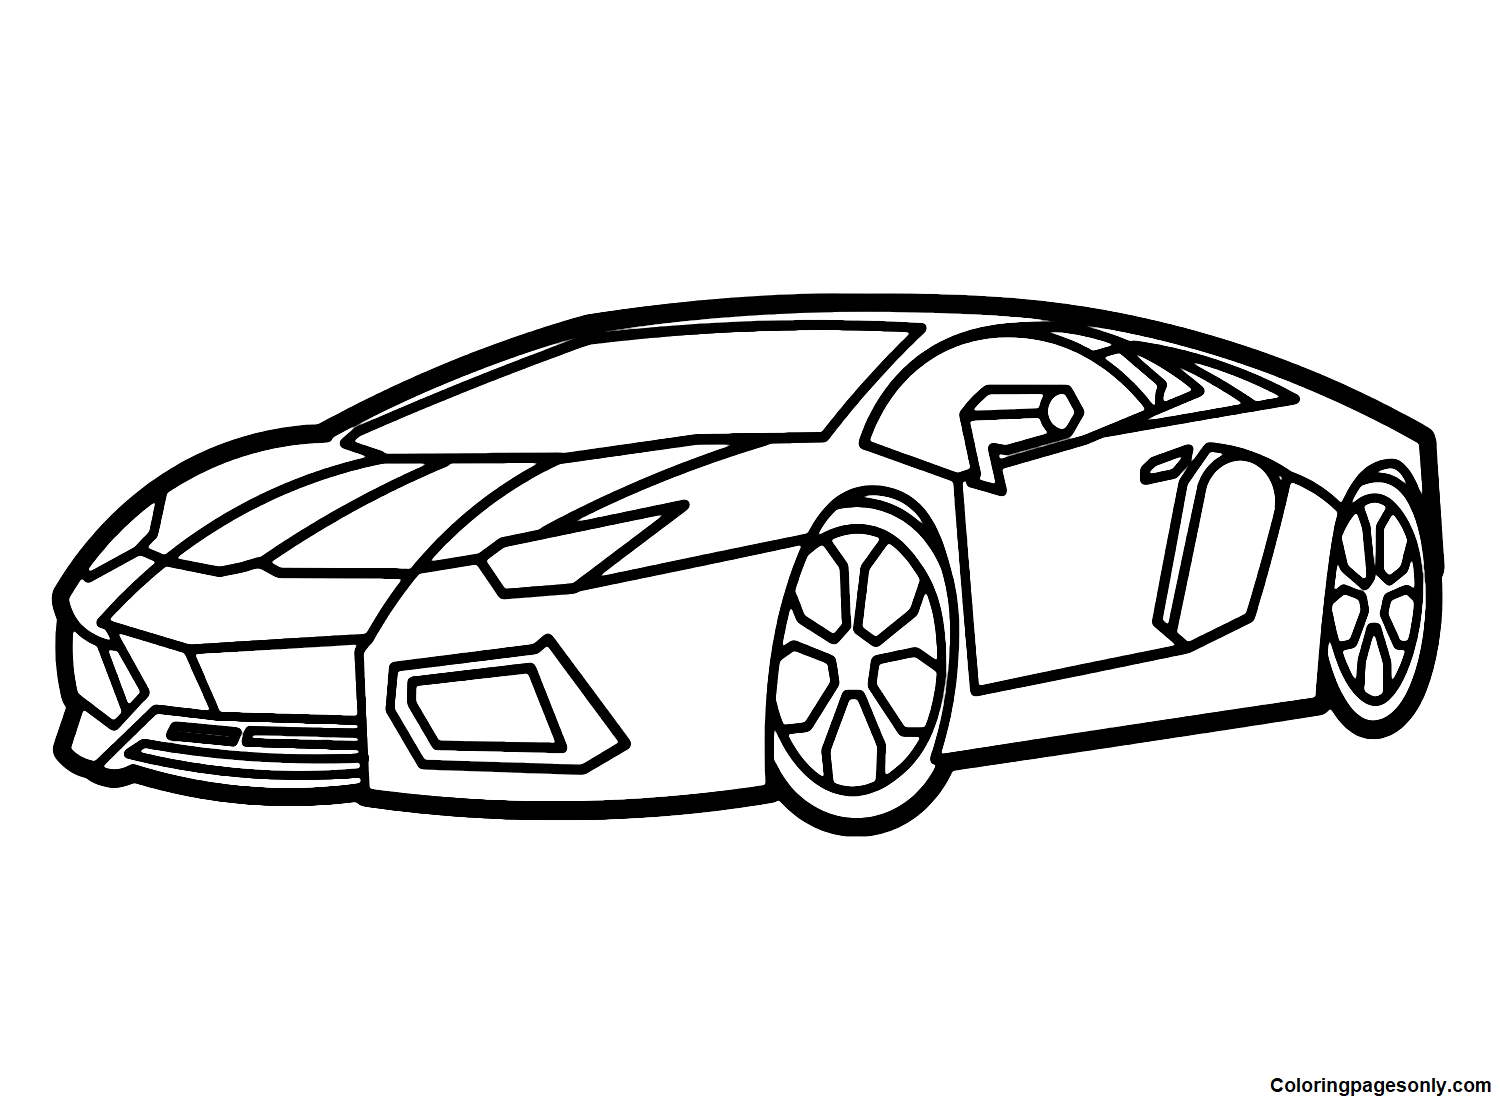 Lamborghini Images Coloring Page